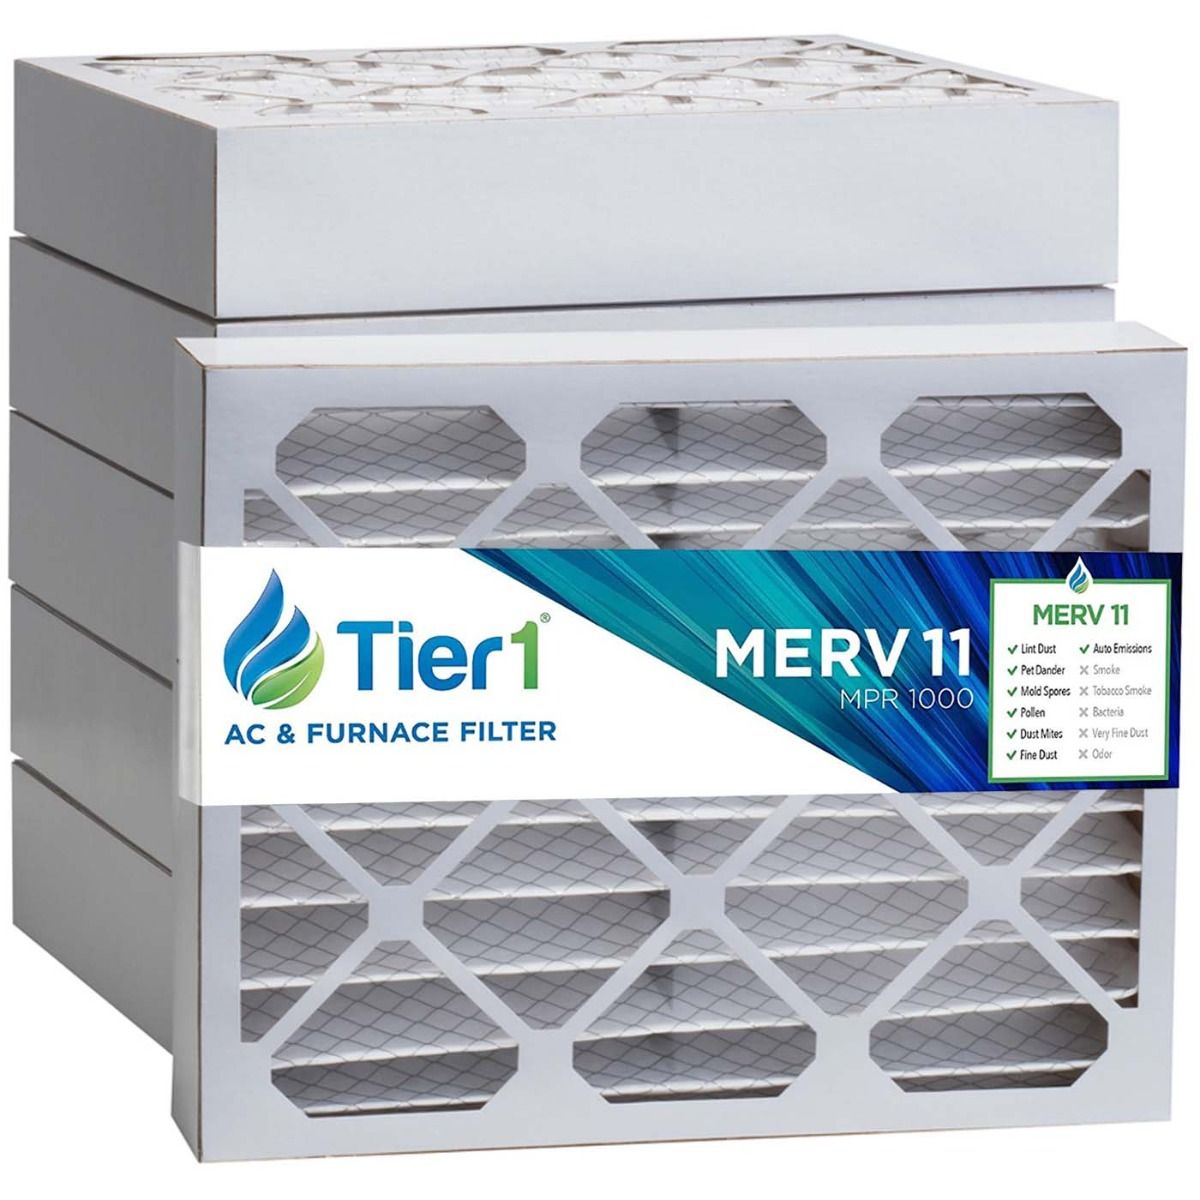 20x25x4 Merv 11 Universal Air Filter By Tier1 (Single Filter)